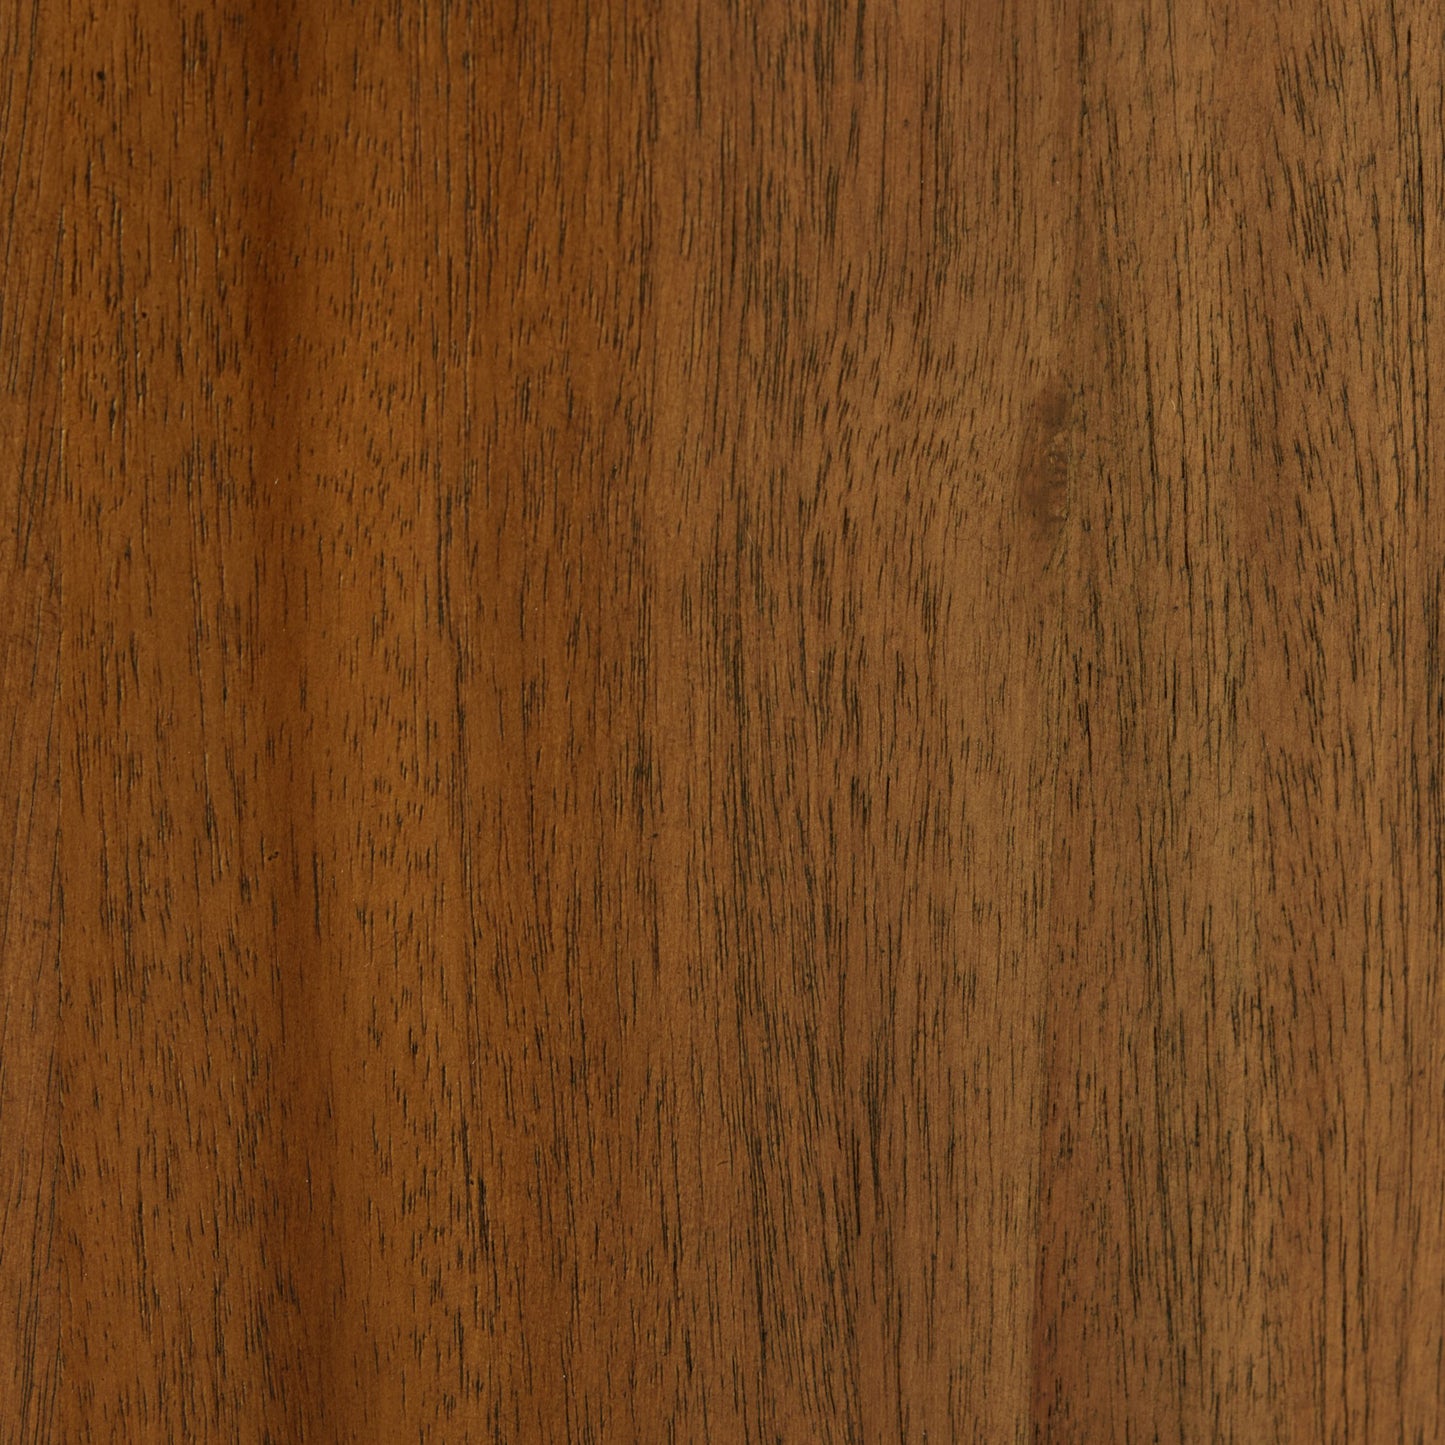 Paden nightstand-seasoned brown acacia